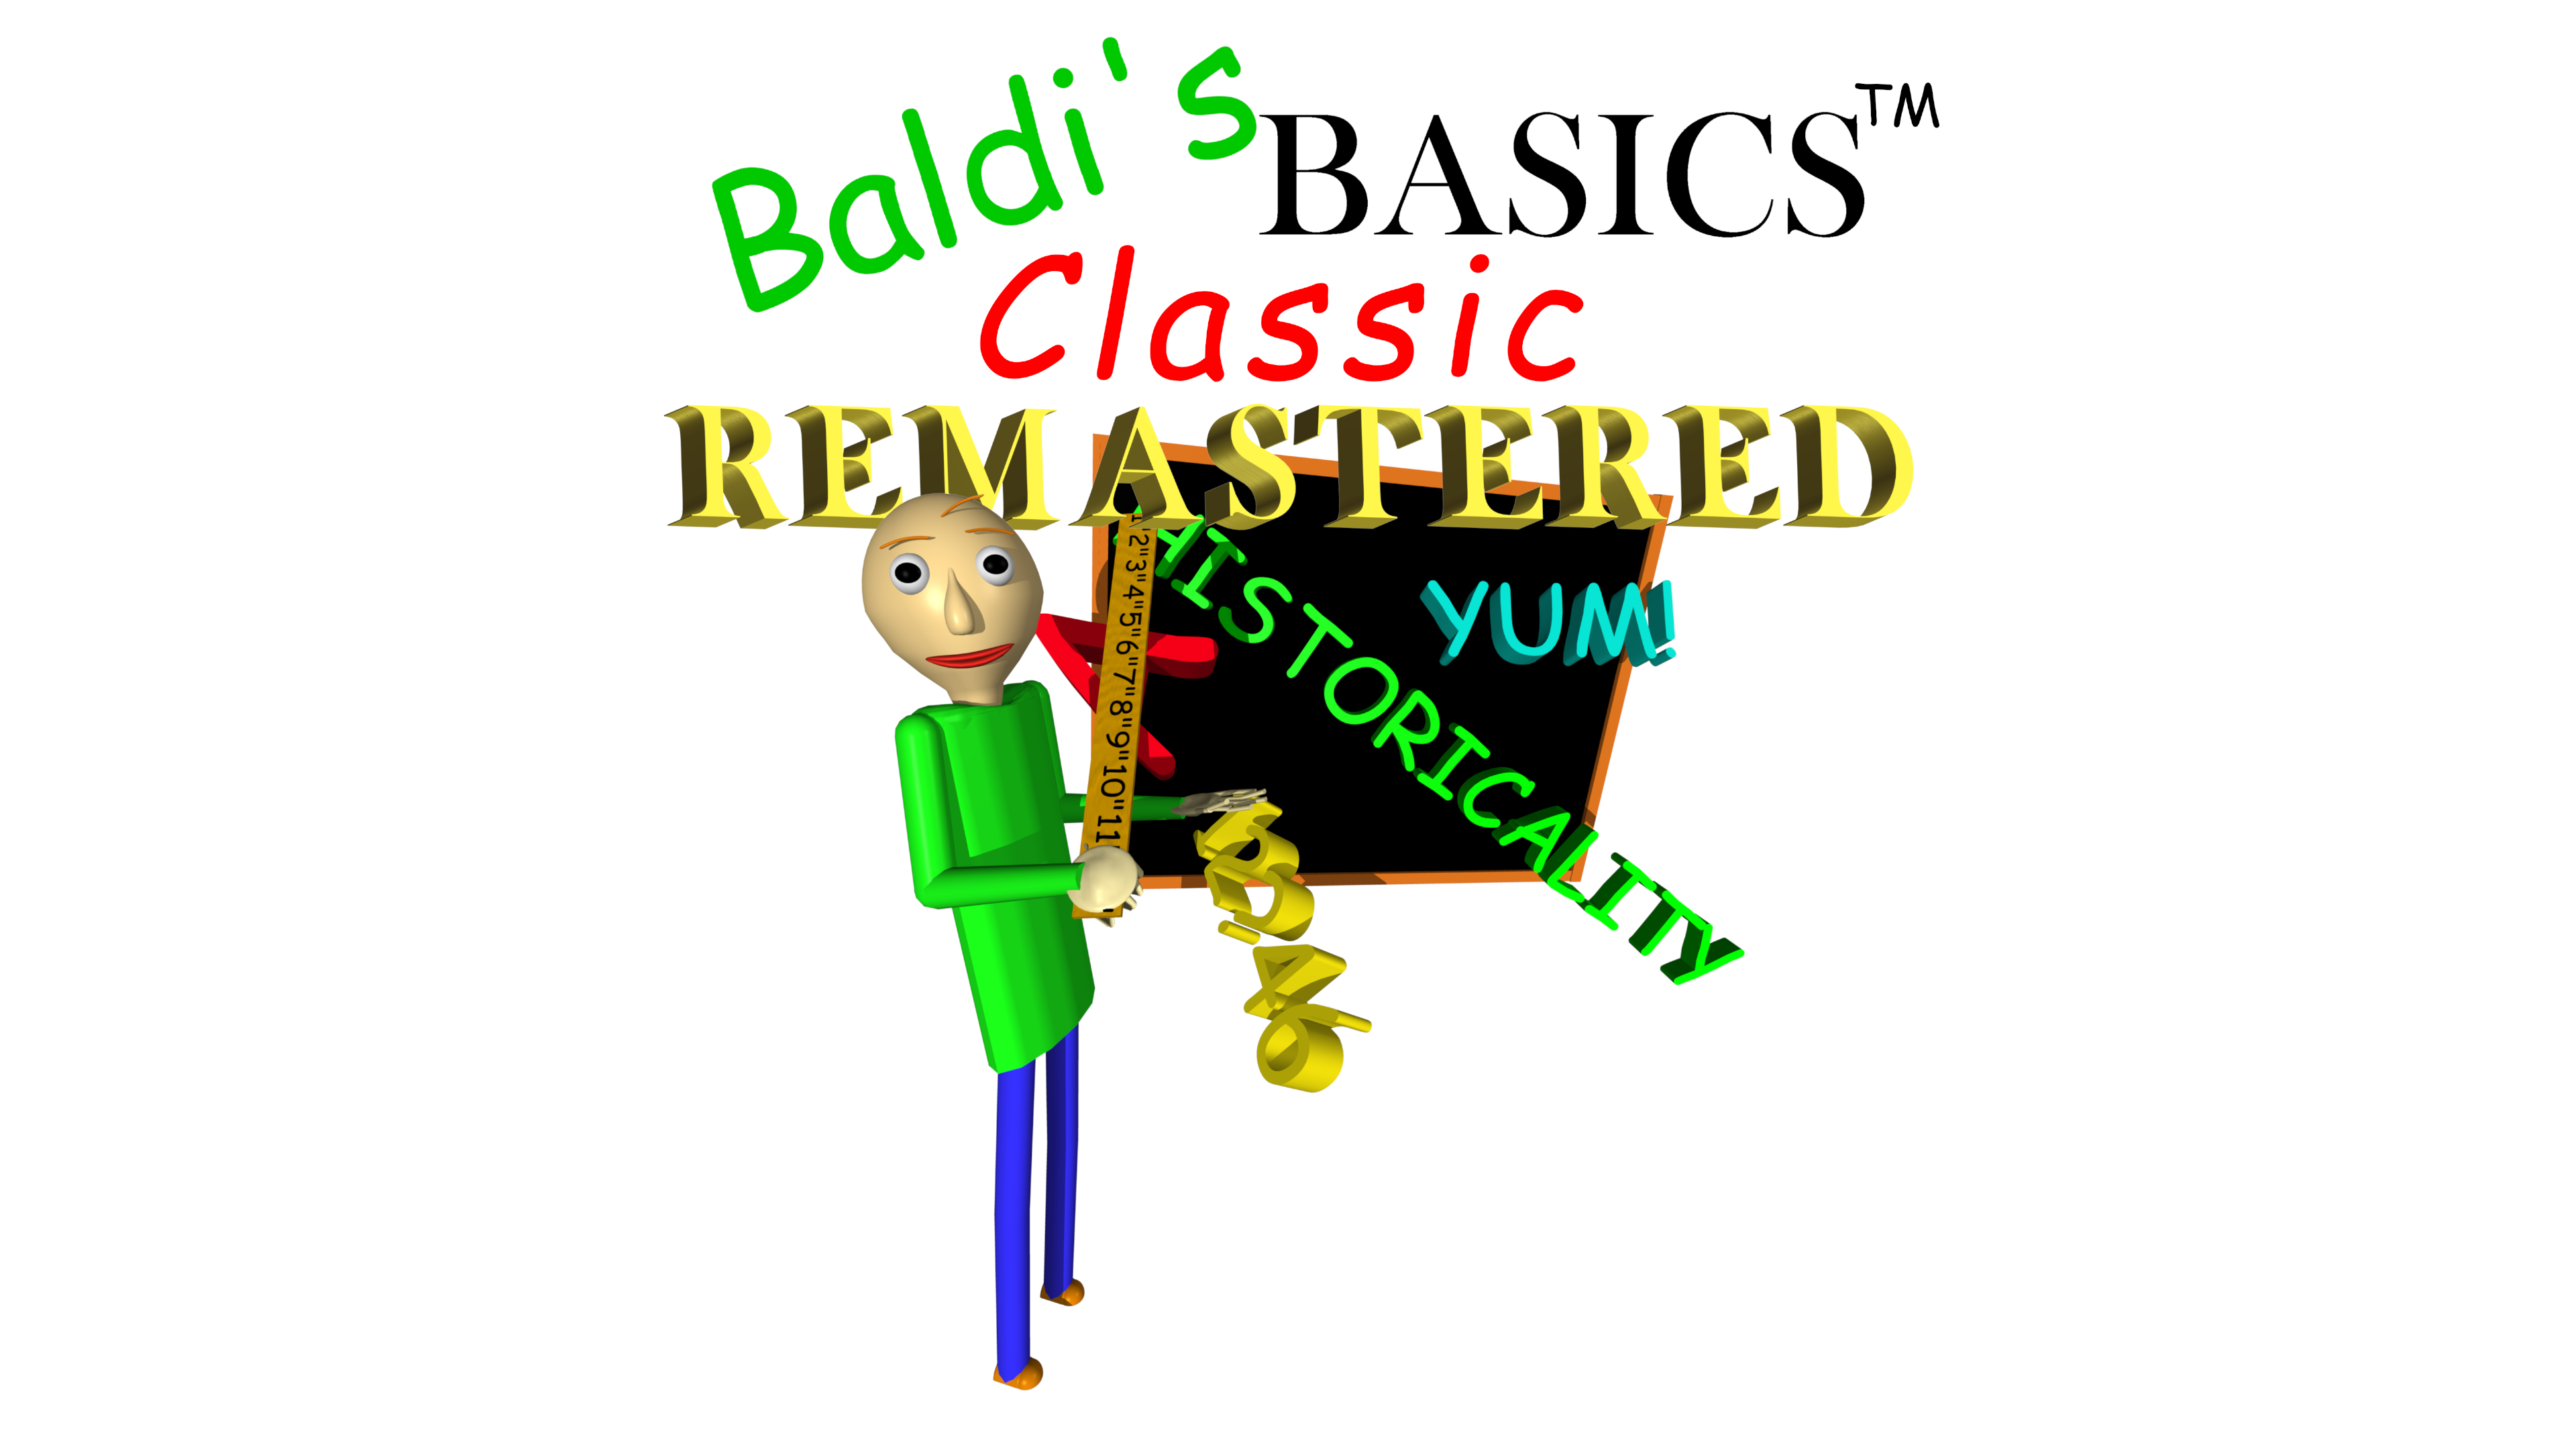 Baldi's Basics Classic Remastered. Baldis Basics Classic Remastered. Baldi Basics Classic. Baldis Basics Baldi. Baldi s basics demo